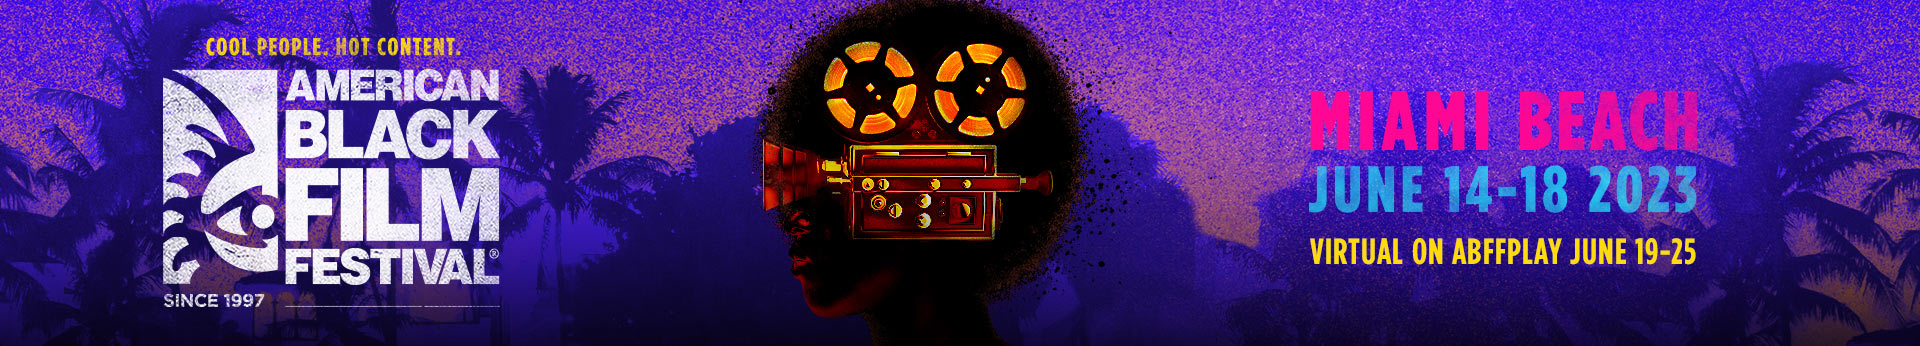 American Black Film Festival - Cool People. Hot Content. Miami Beach, June 14-18, 2023 - Virtual on ABFFPLAY June 19-25